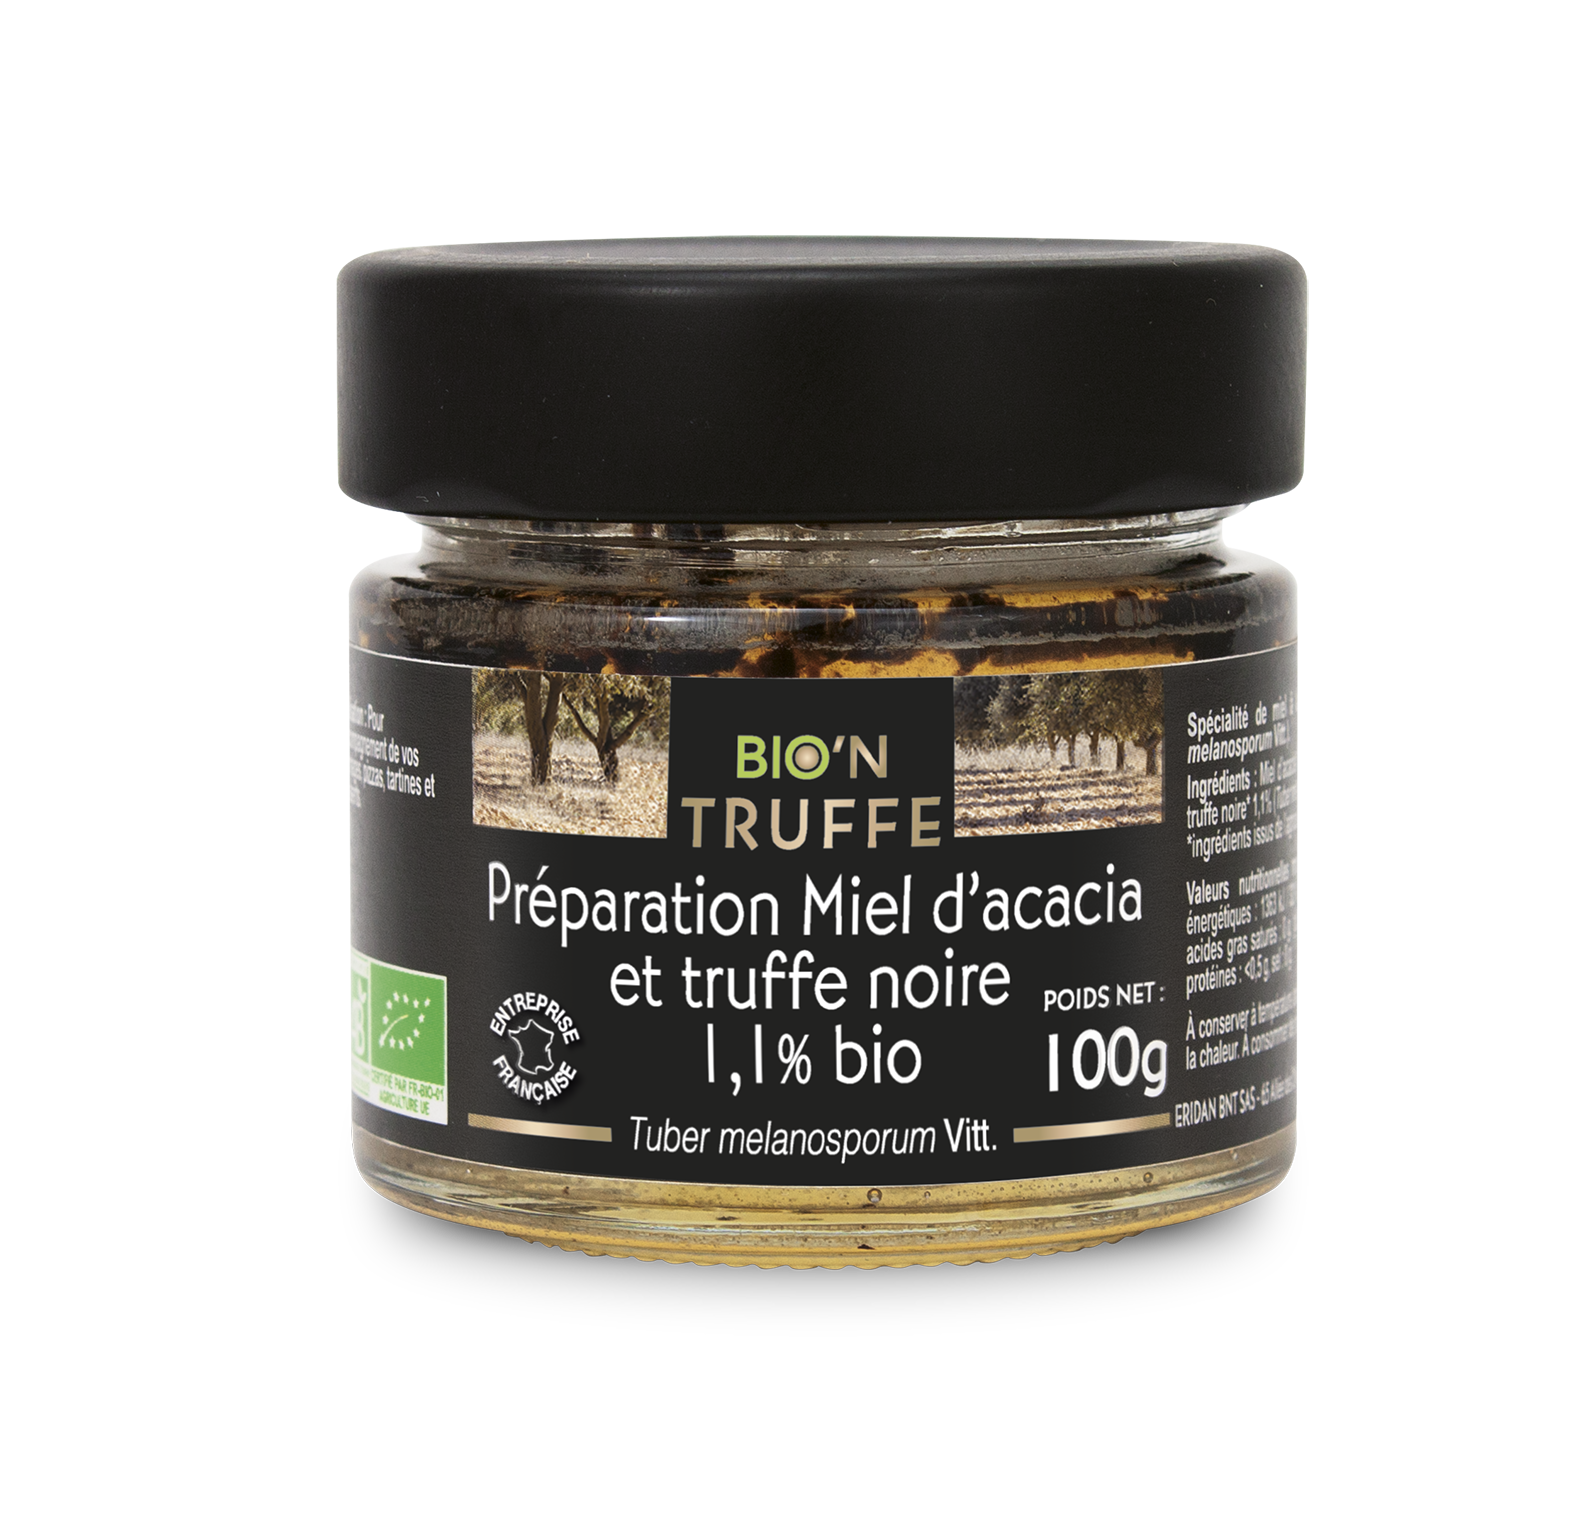 creme parmesan truffe noire 1.5 80 biontruffe